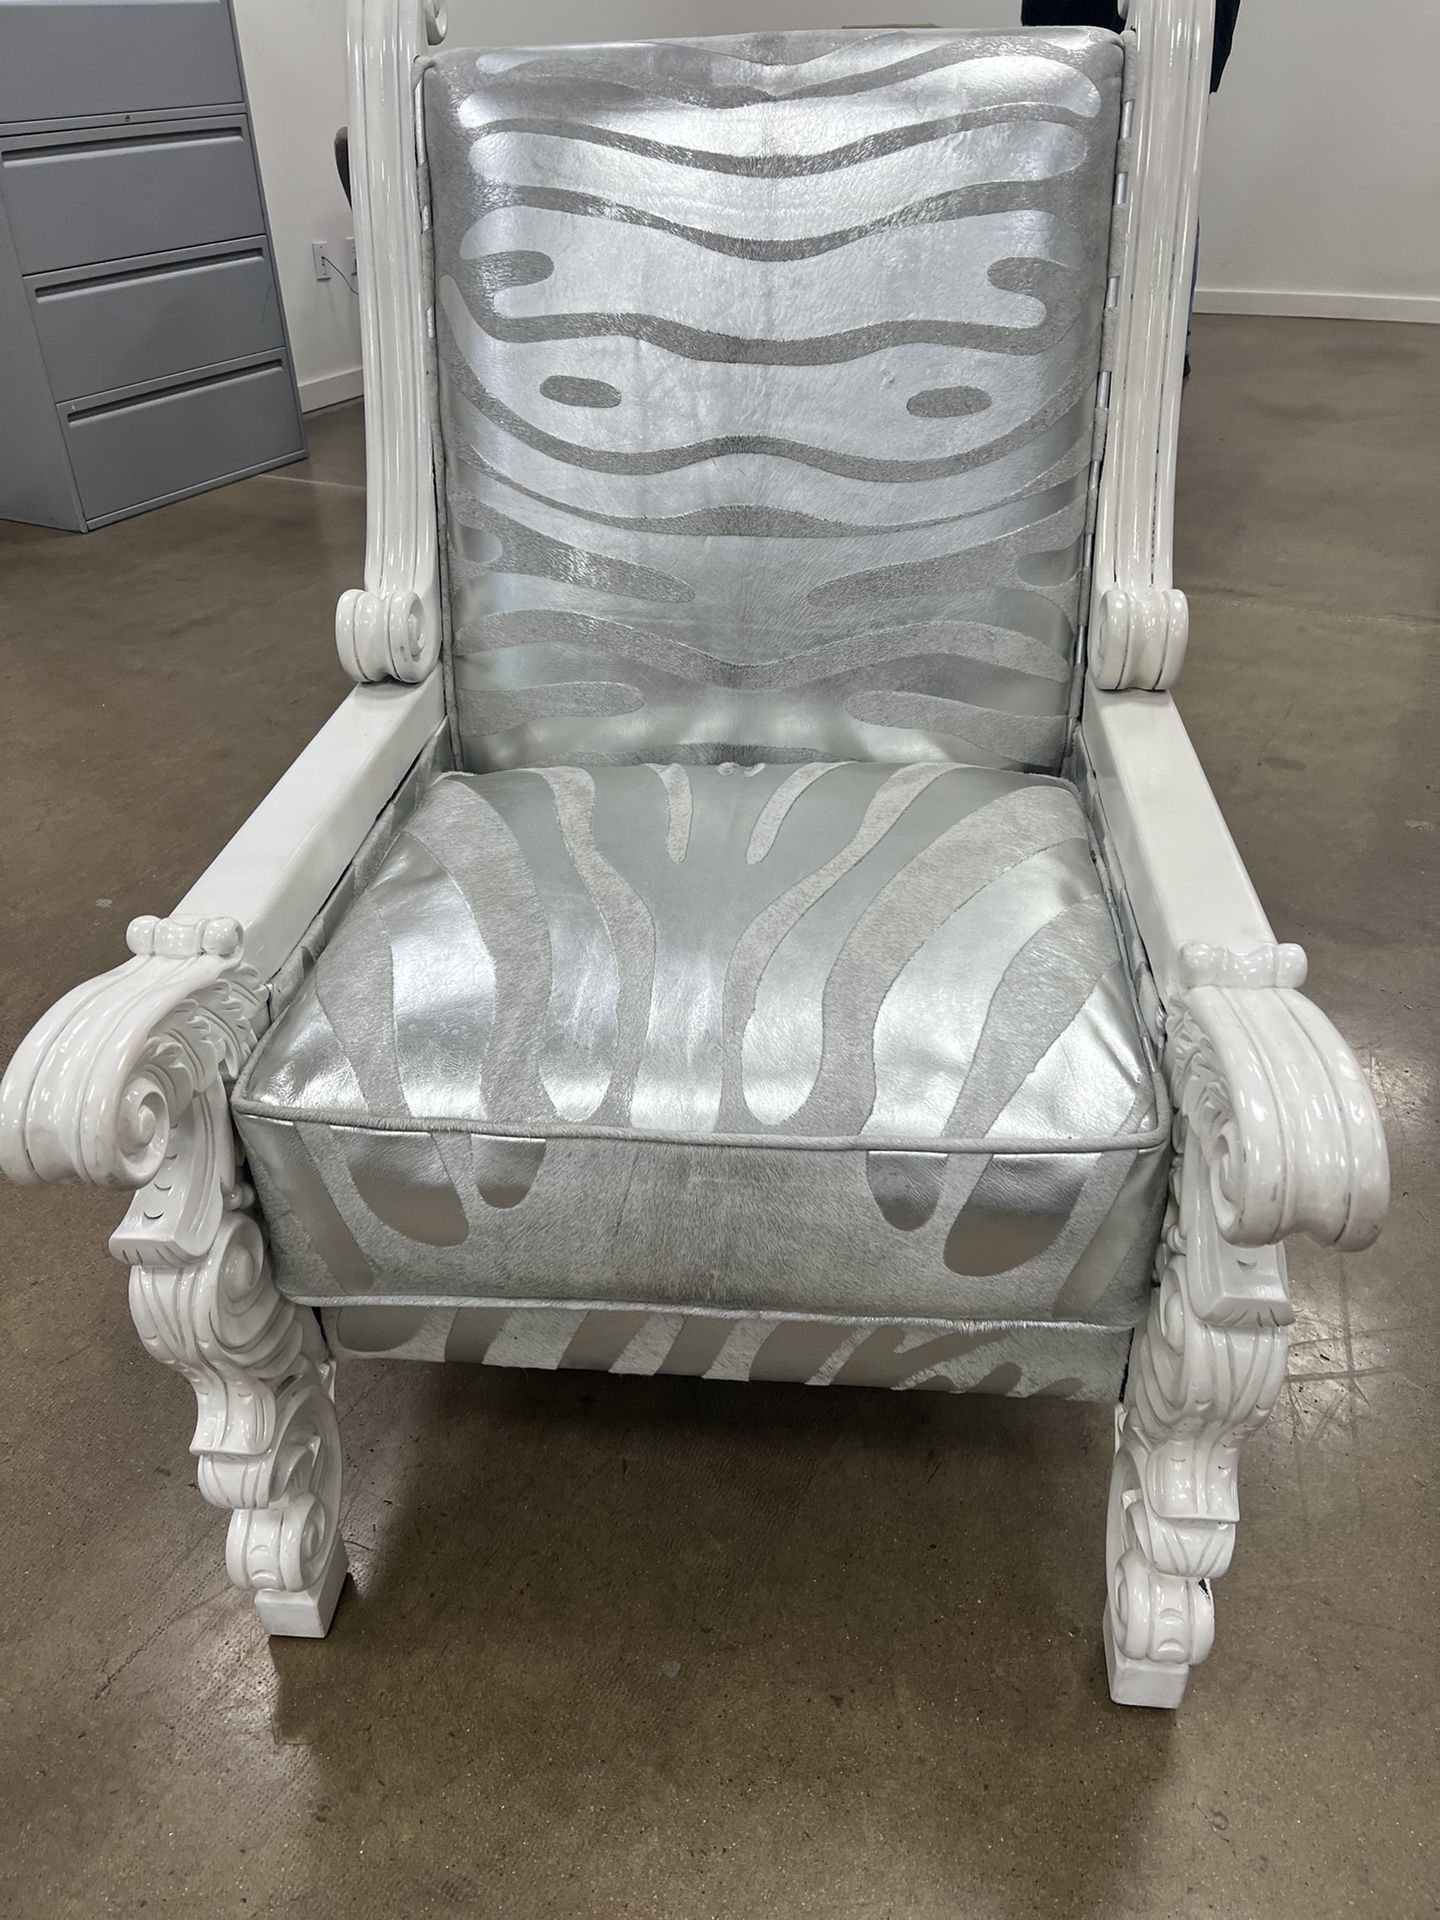 Zebra Hide Oversized Throne Chair